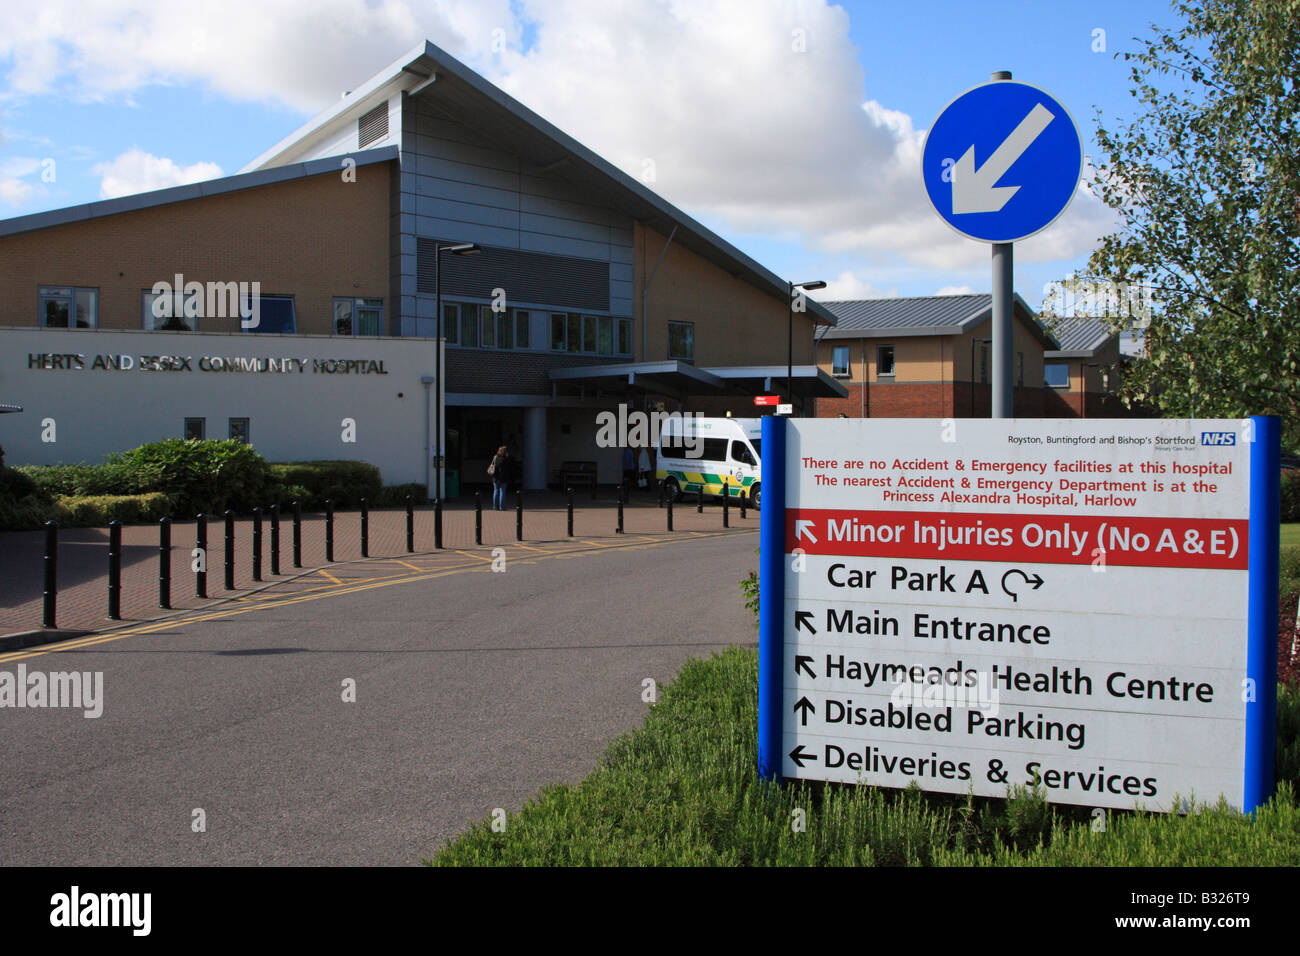 Herts ed Essex comunità ospedale NHS bishops stortford herts Inghilterra uk gb Foto Stock